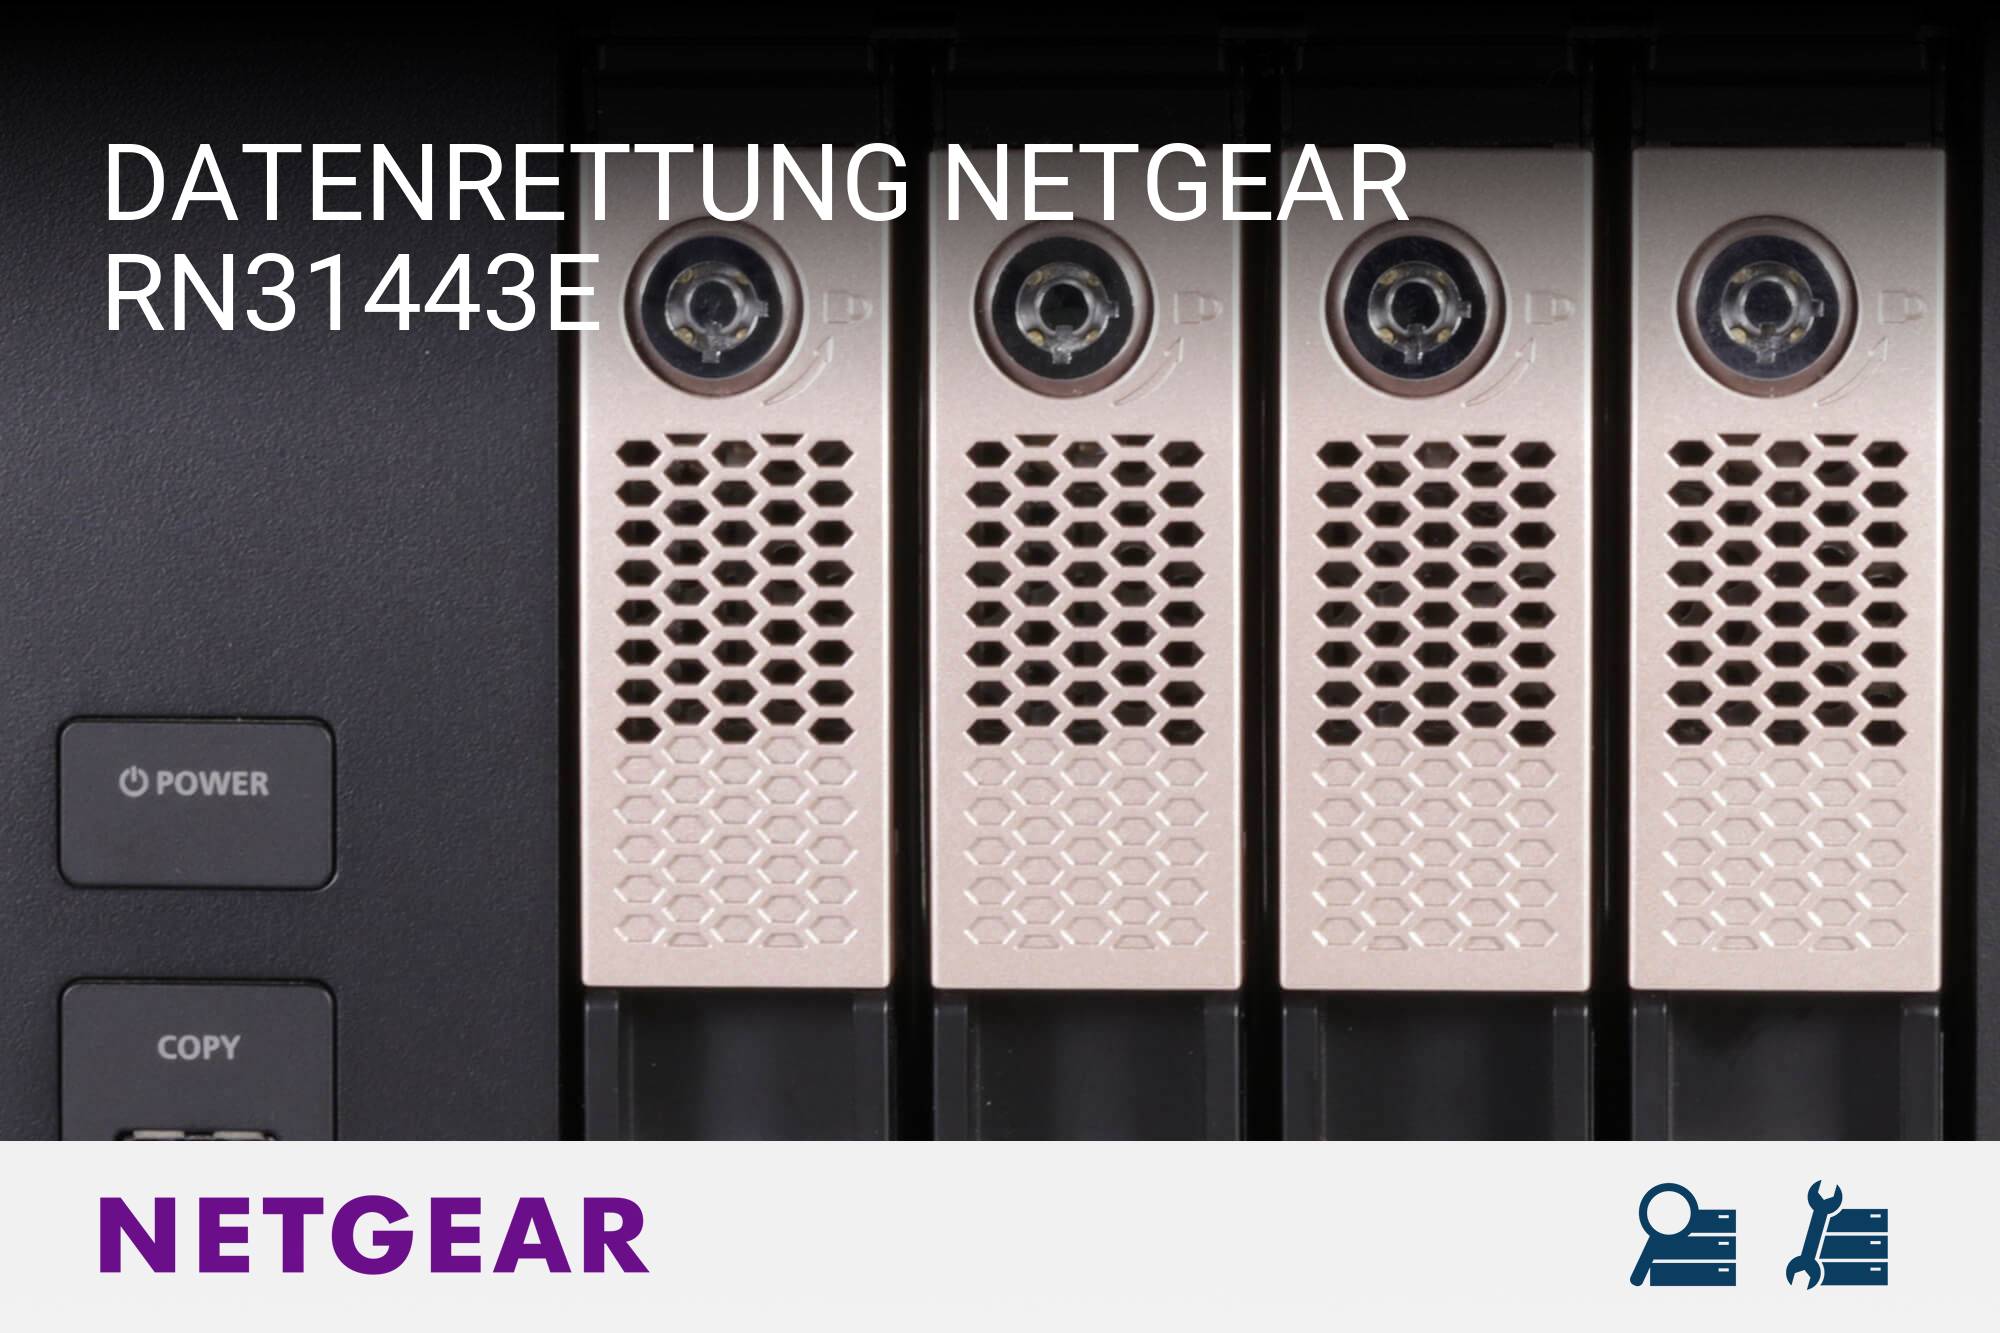 Netgear RN31443E